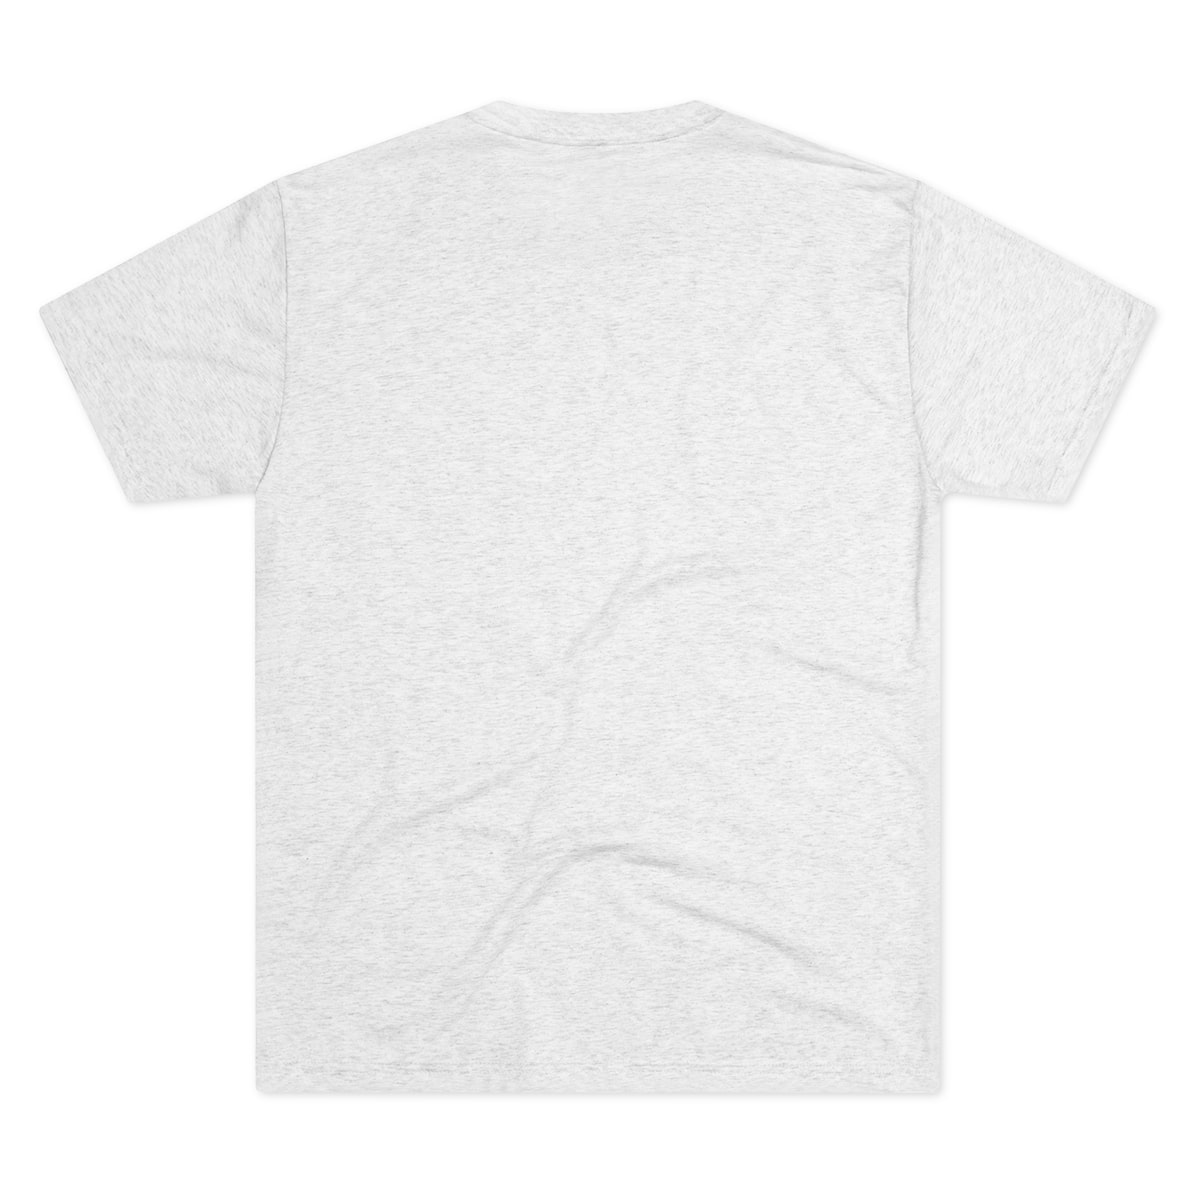 Teal Bride Logo T- Shirt - Bride Ministries International